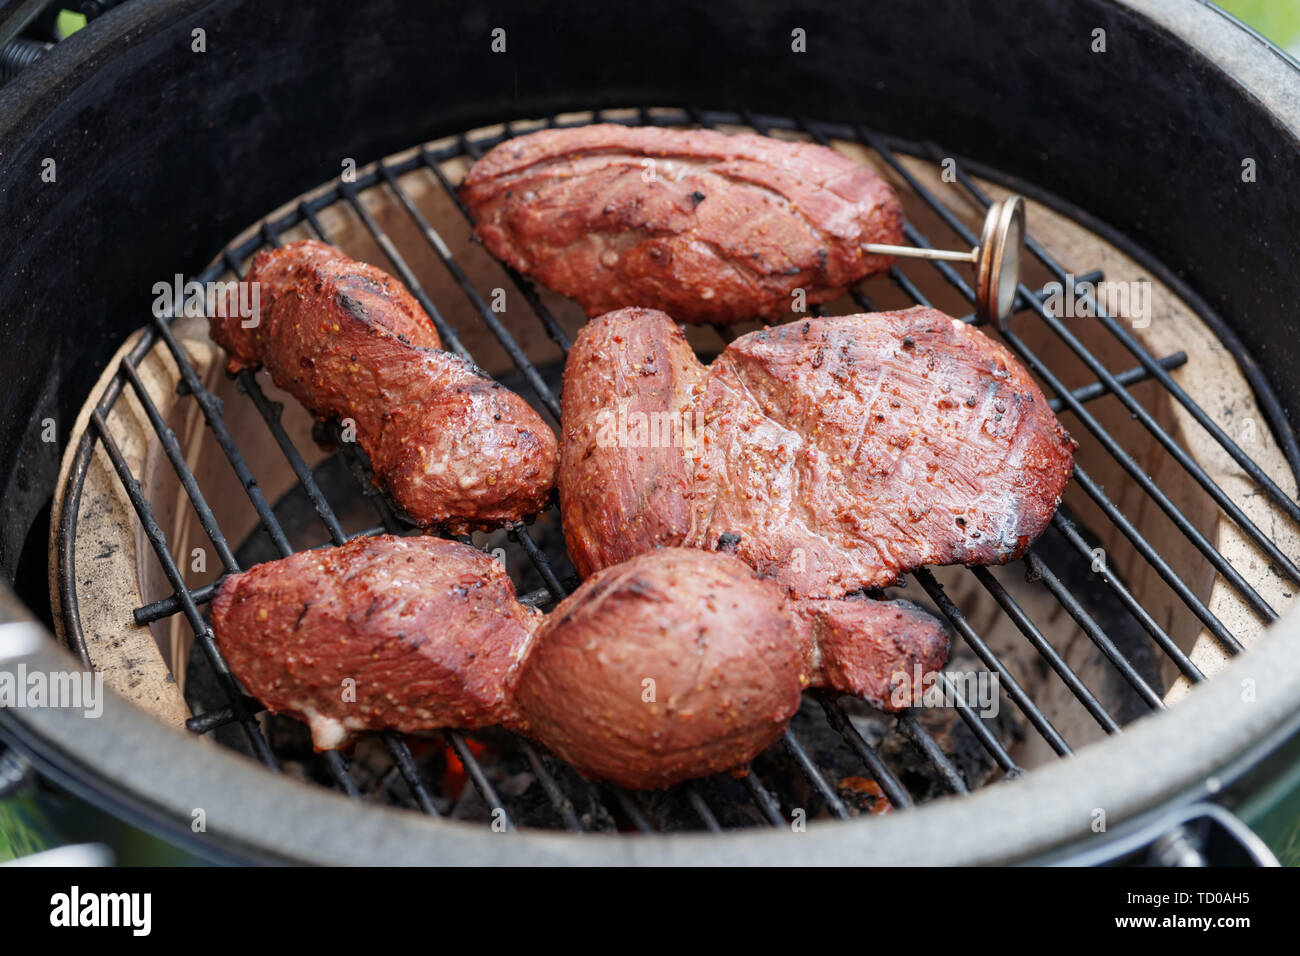 https://c8.alamy.com/comp/TD0AH5/chunks-of-meat-on-charcoal-grill-TD0AH5.jpg